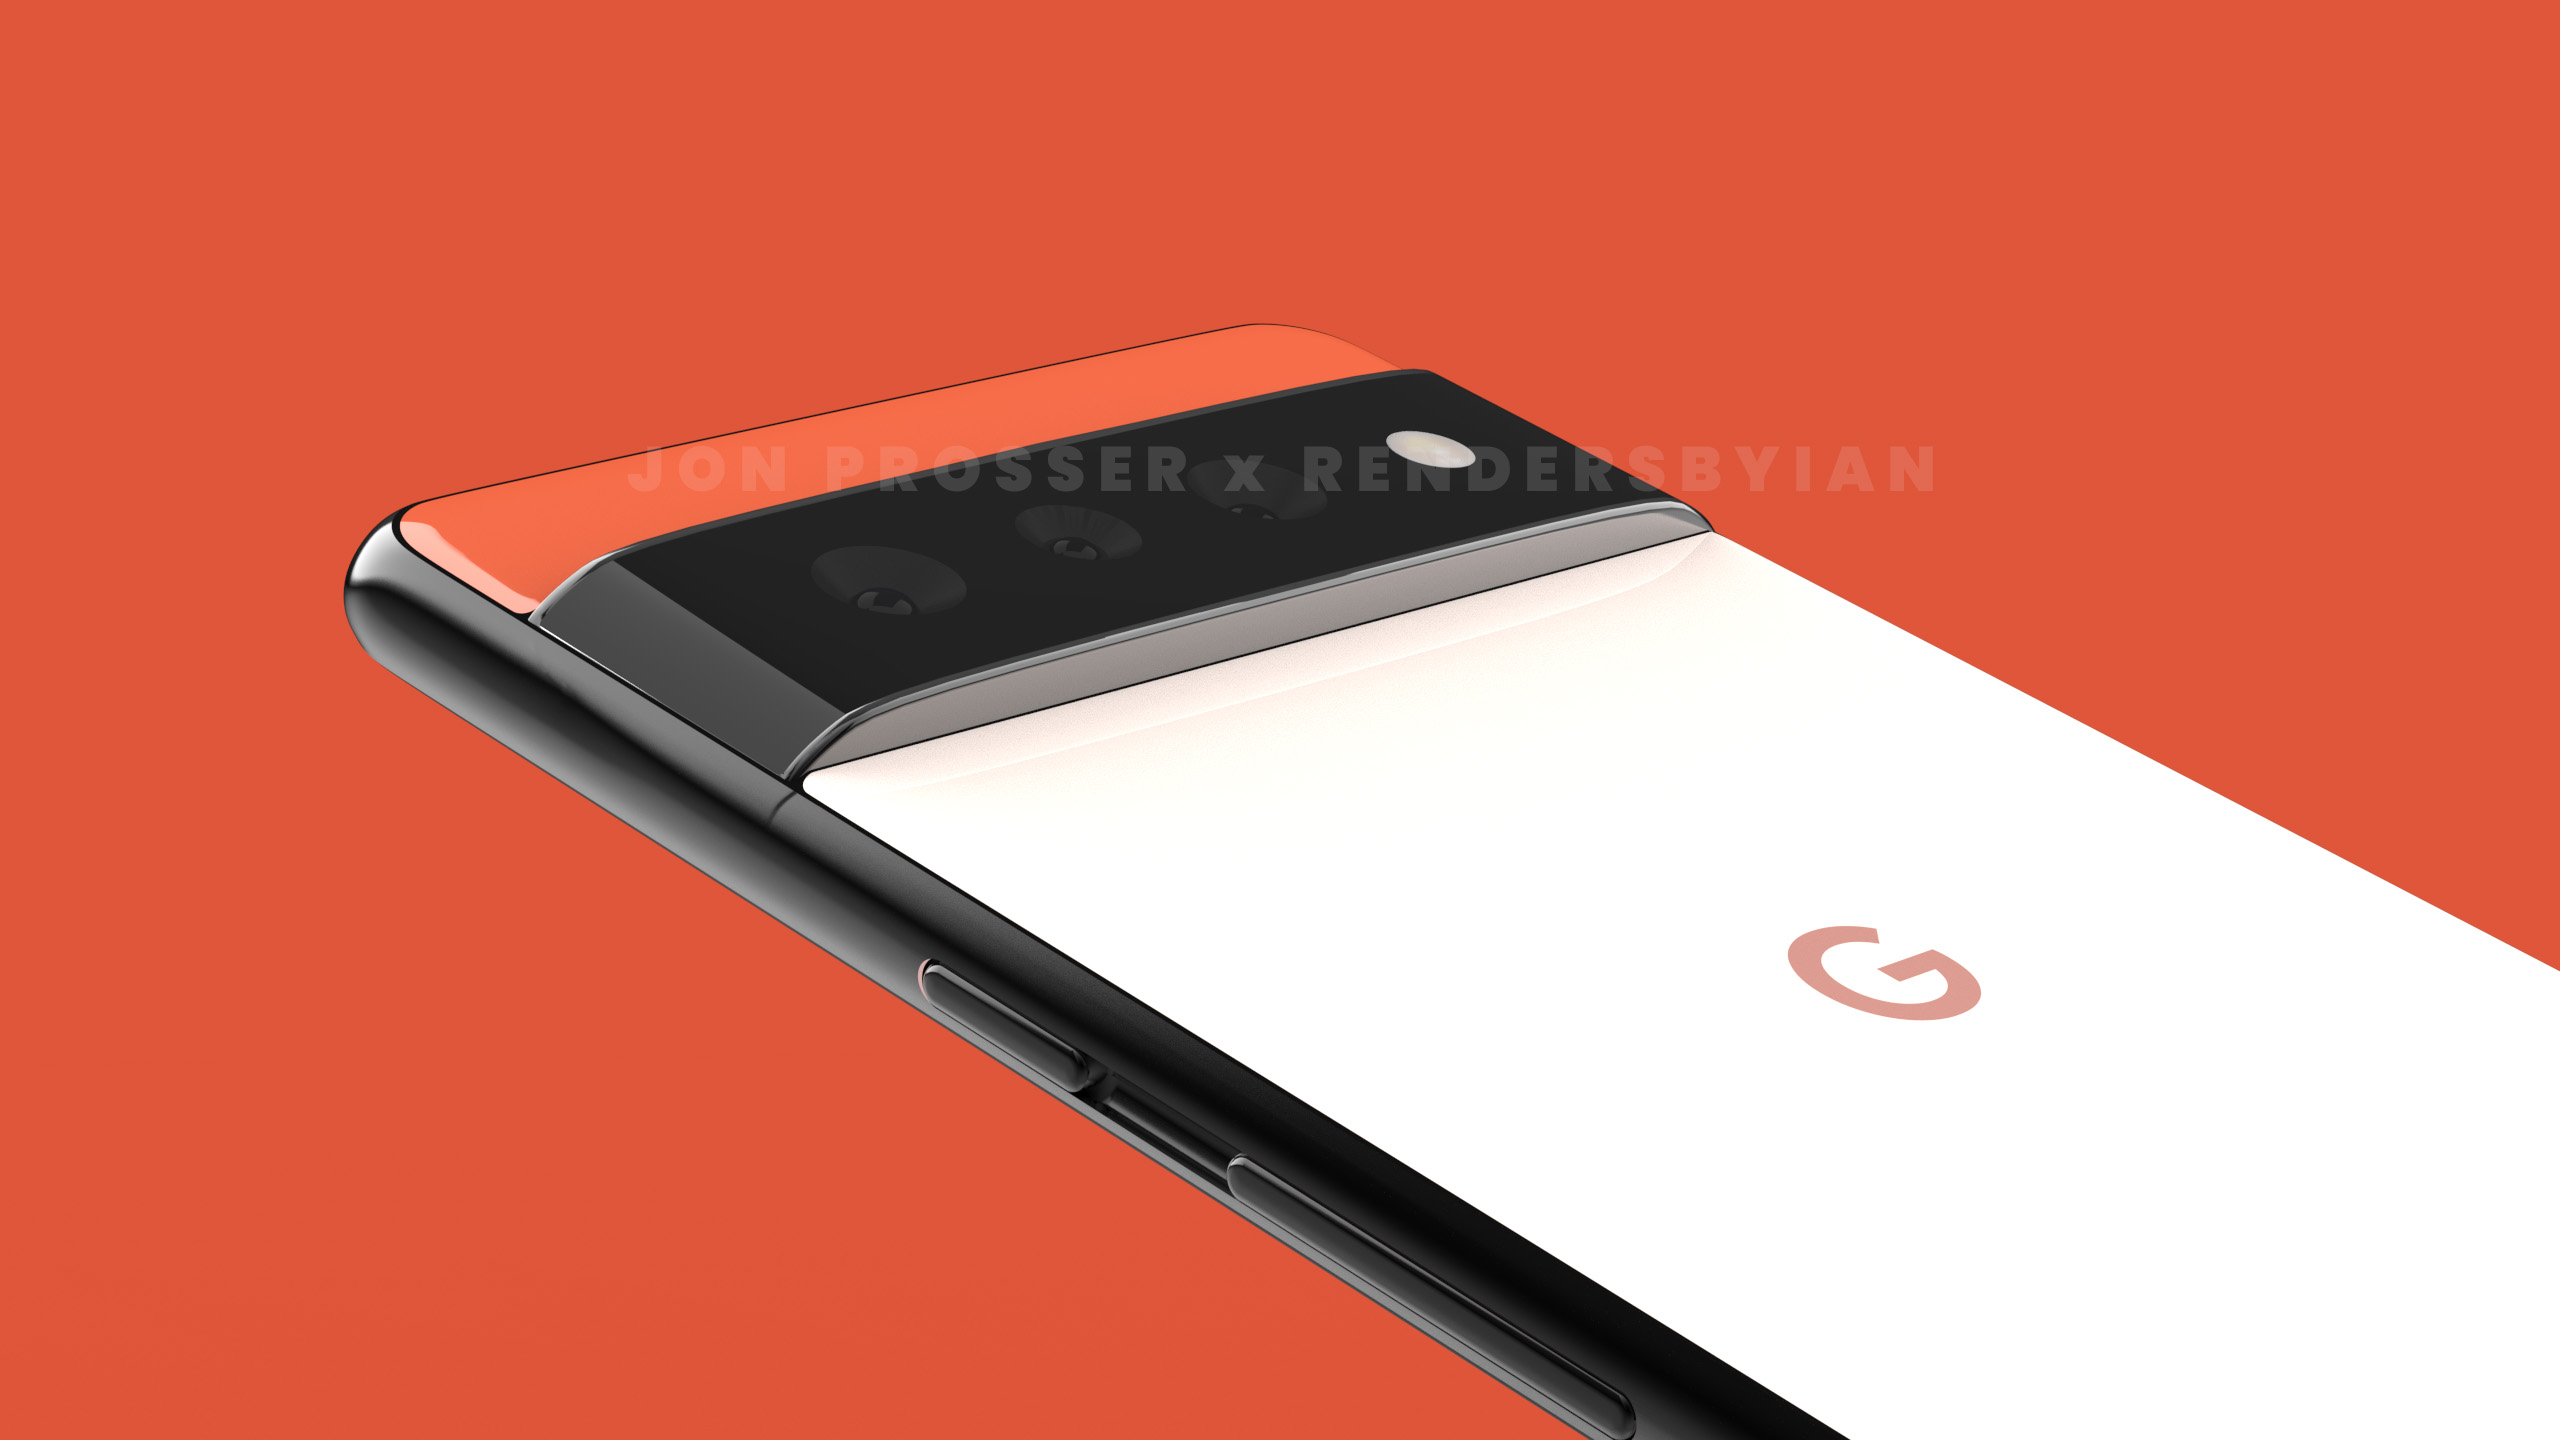 Smartphones with a unique design: John Prosser showed how Google Pixel 6 and Google Pixel 6 Pro will look